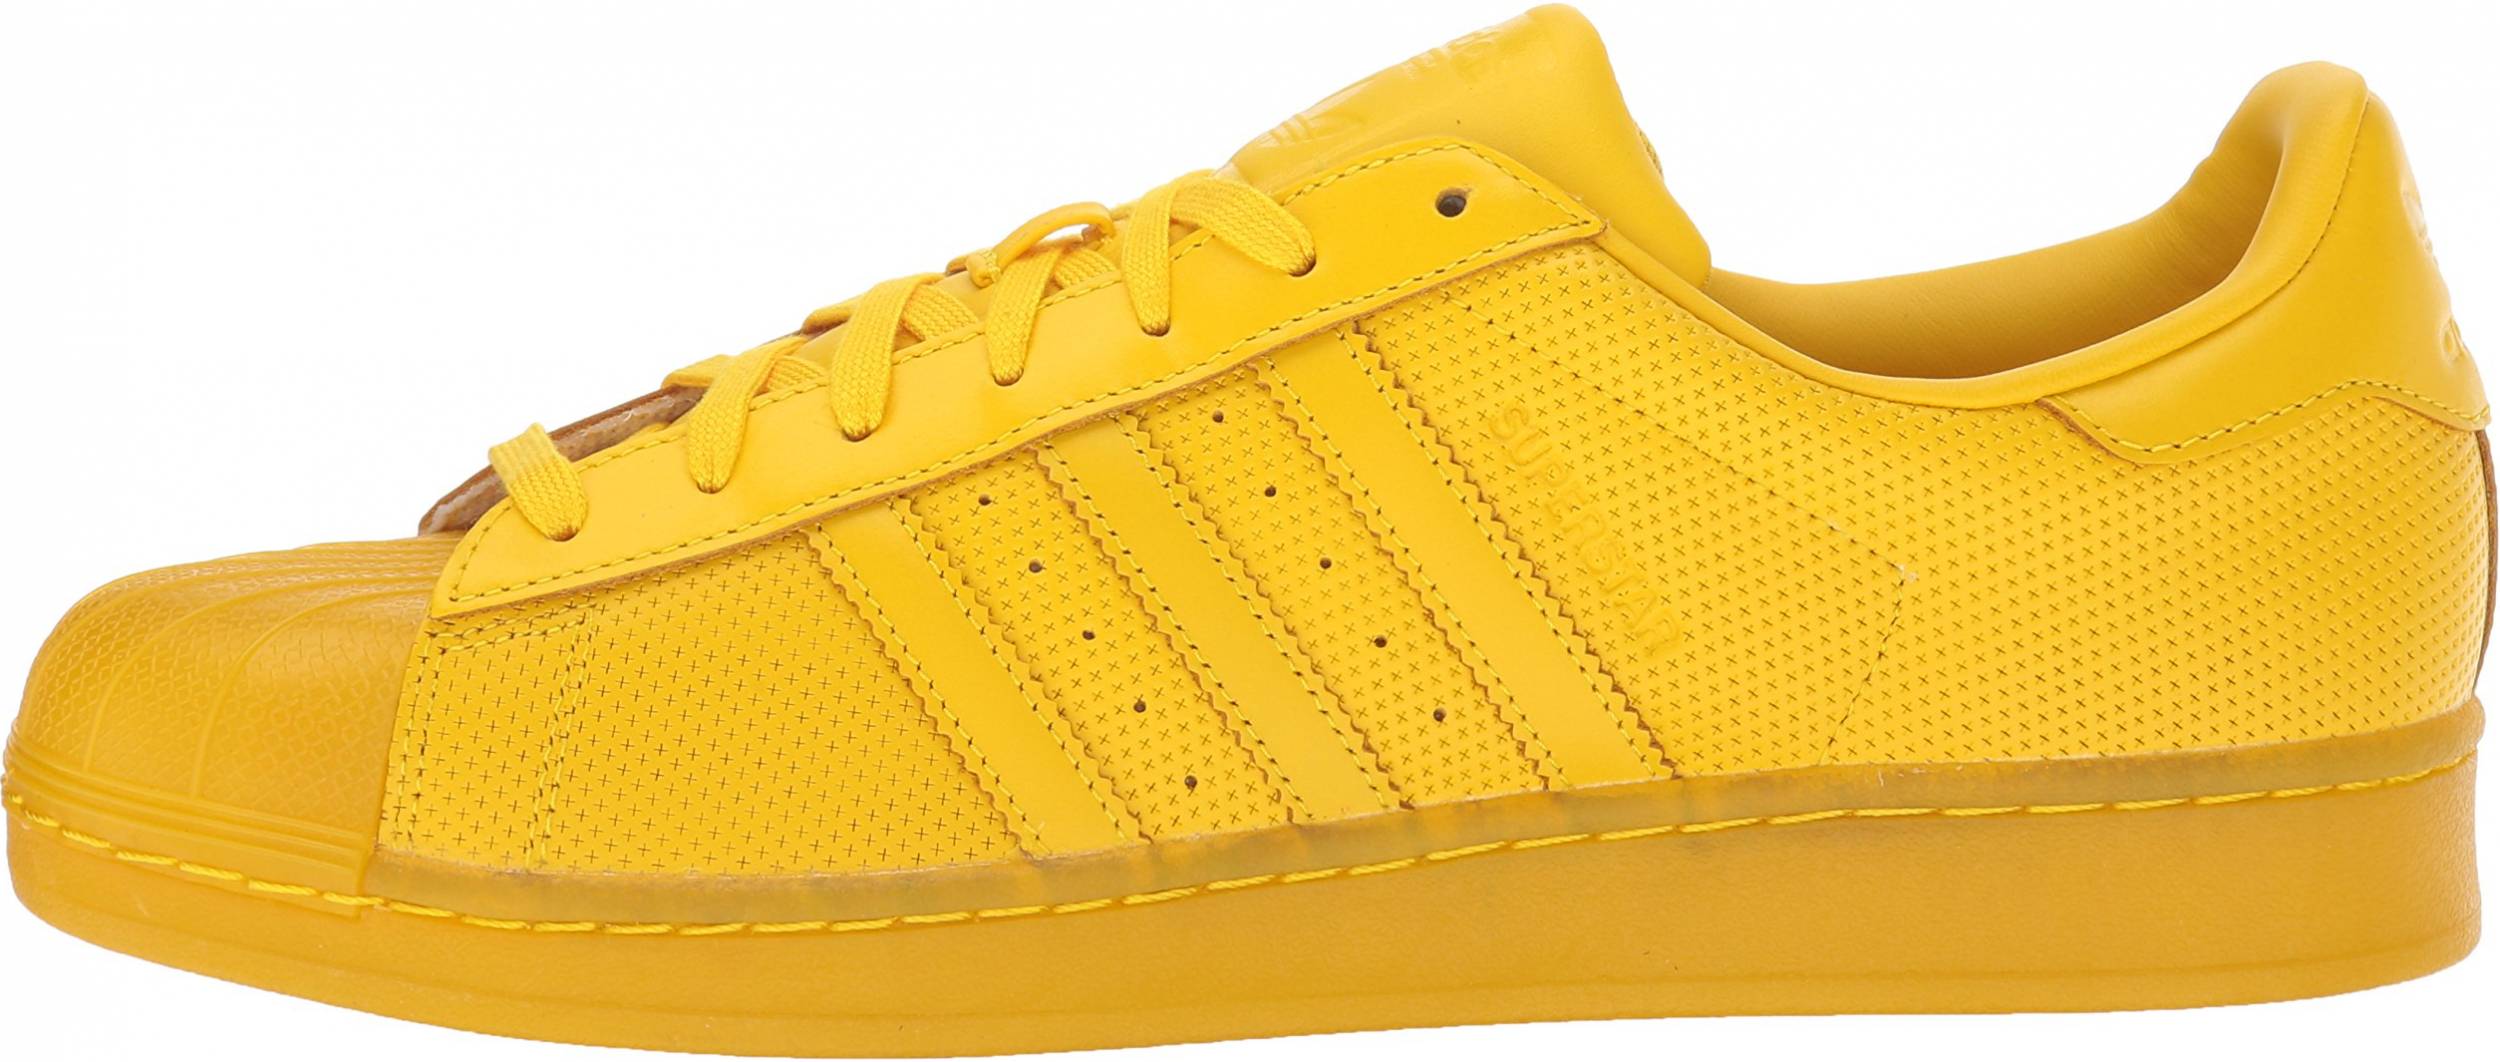 black and yellow shell toe adidas